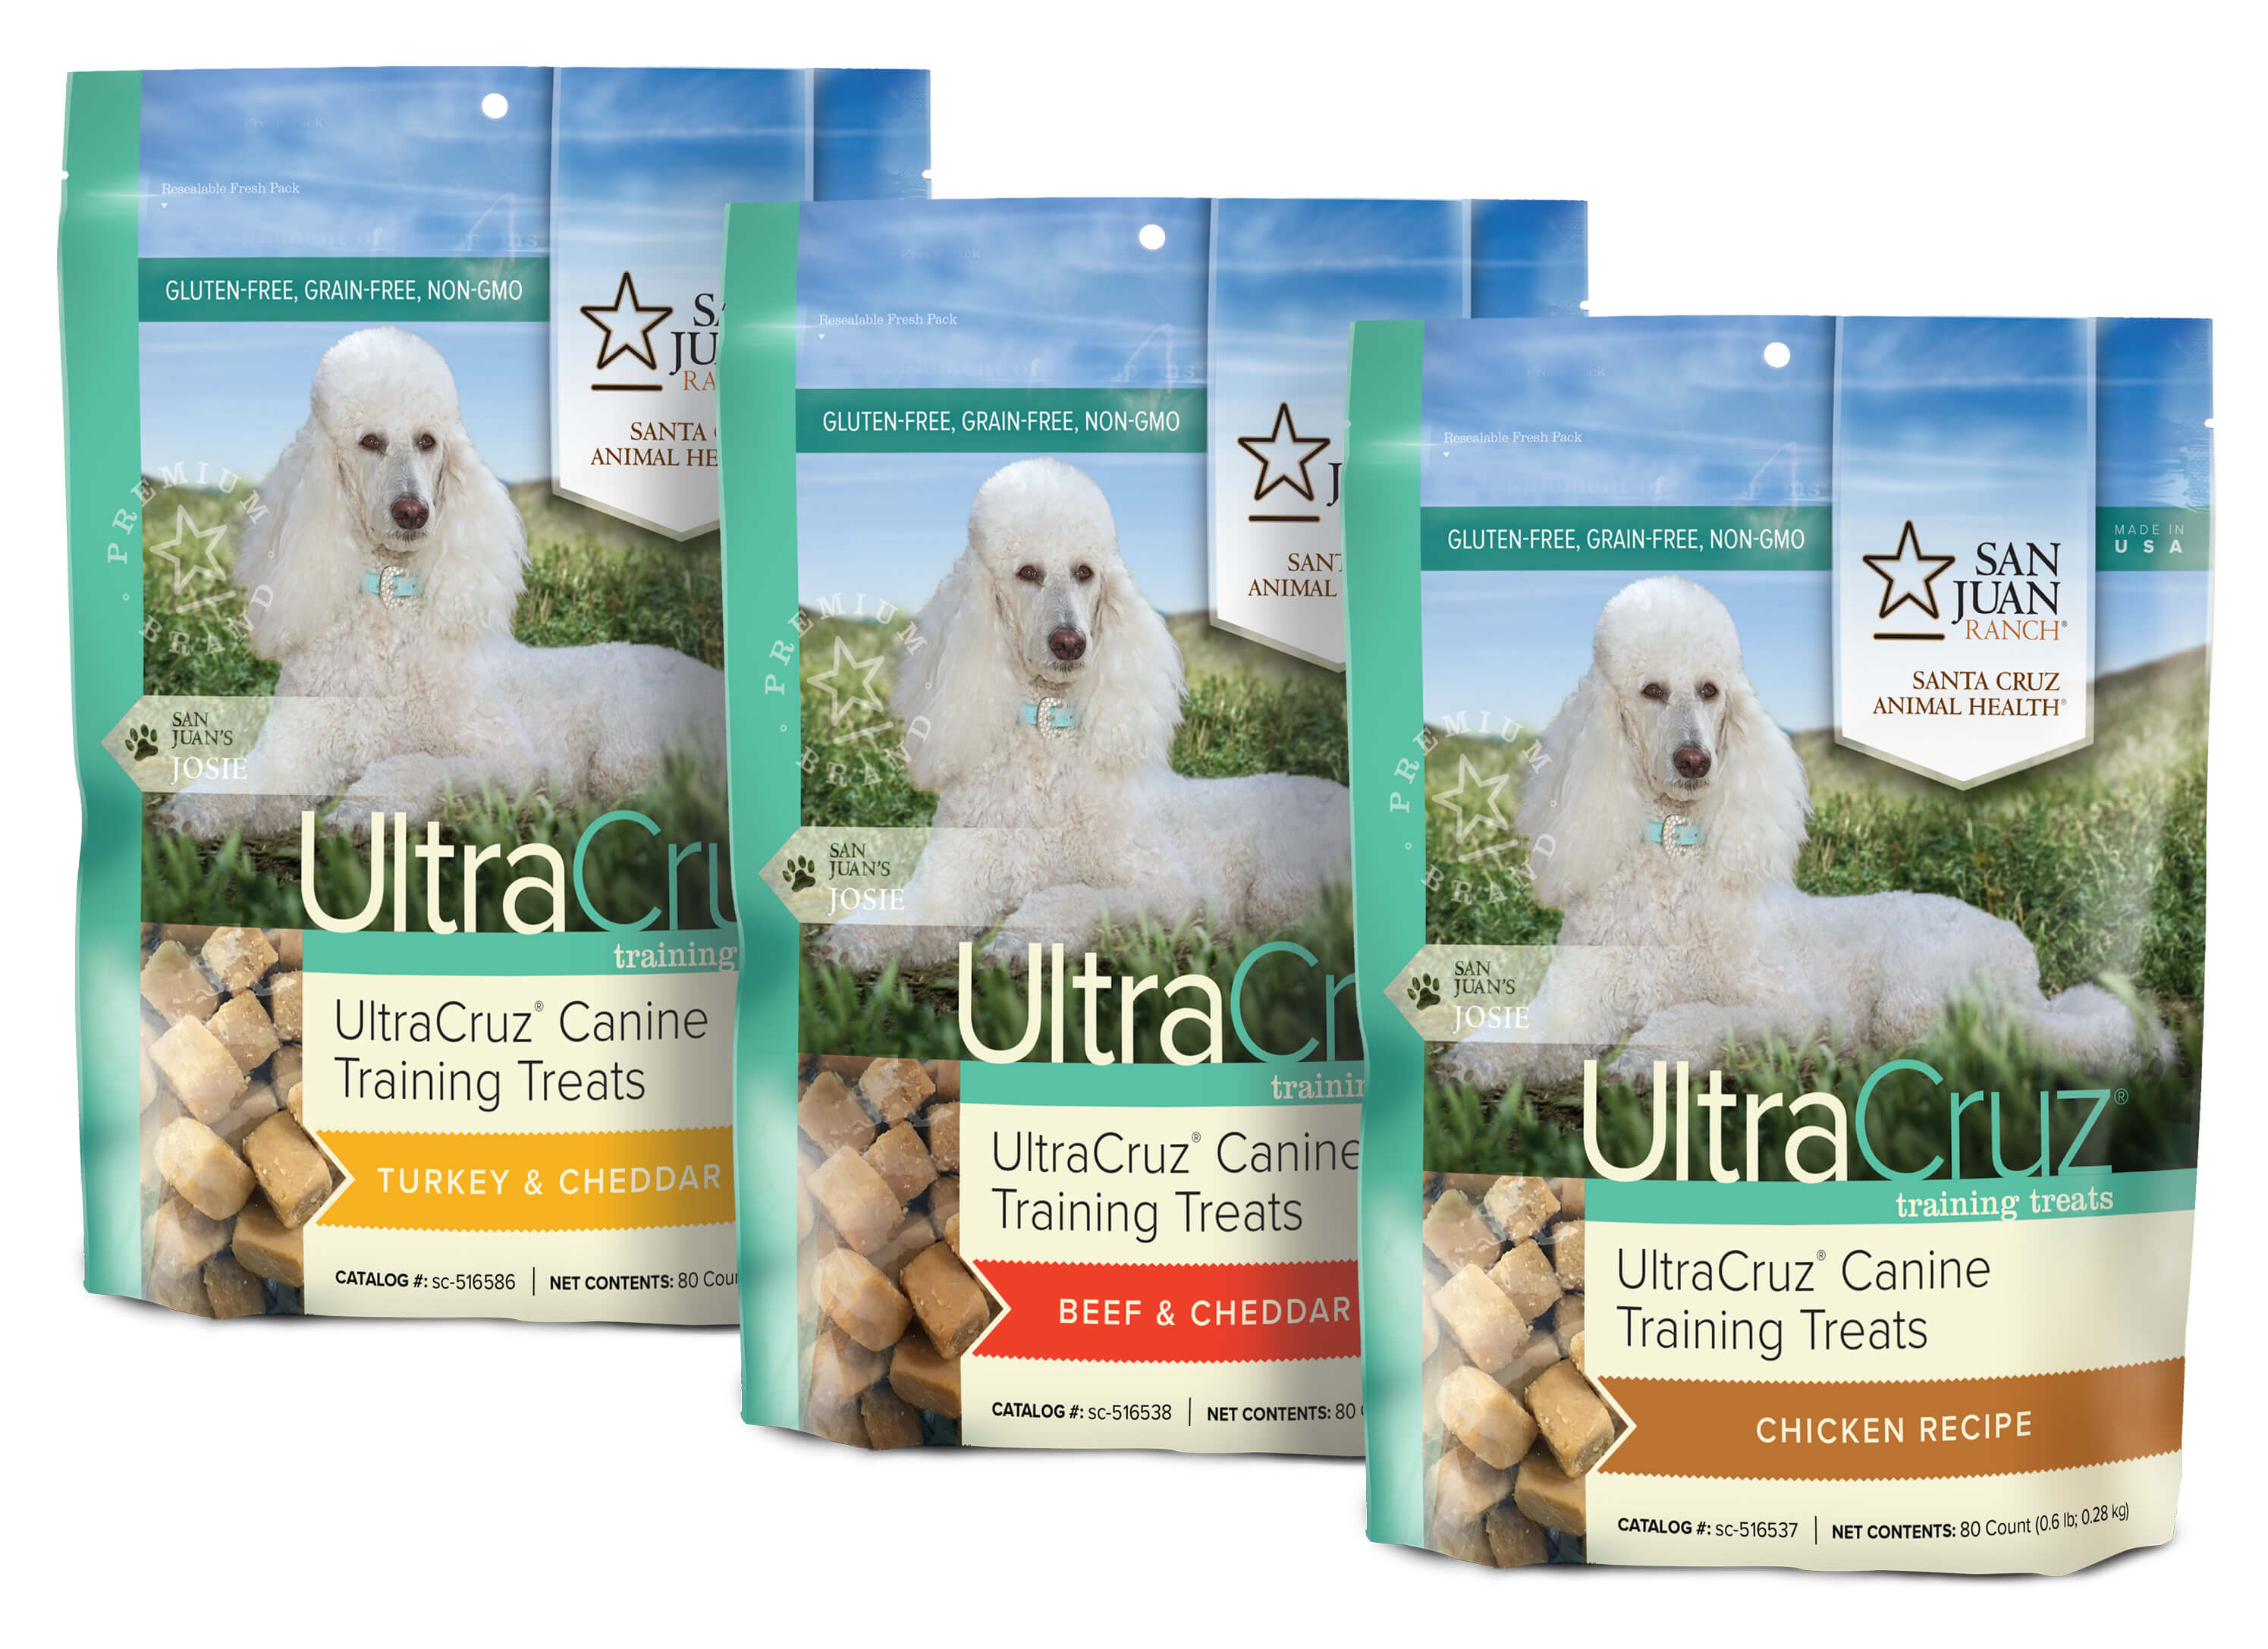 https://media.scahealth.com/product/ultracruz-canine-training-treats-_39_33_z_393399.jpg